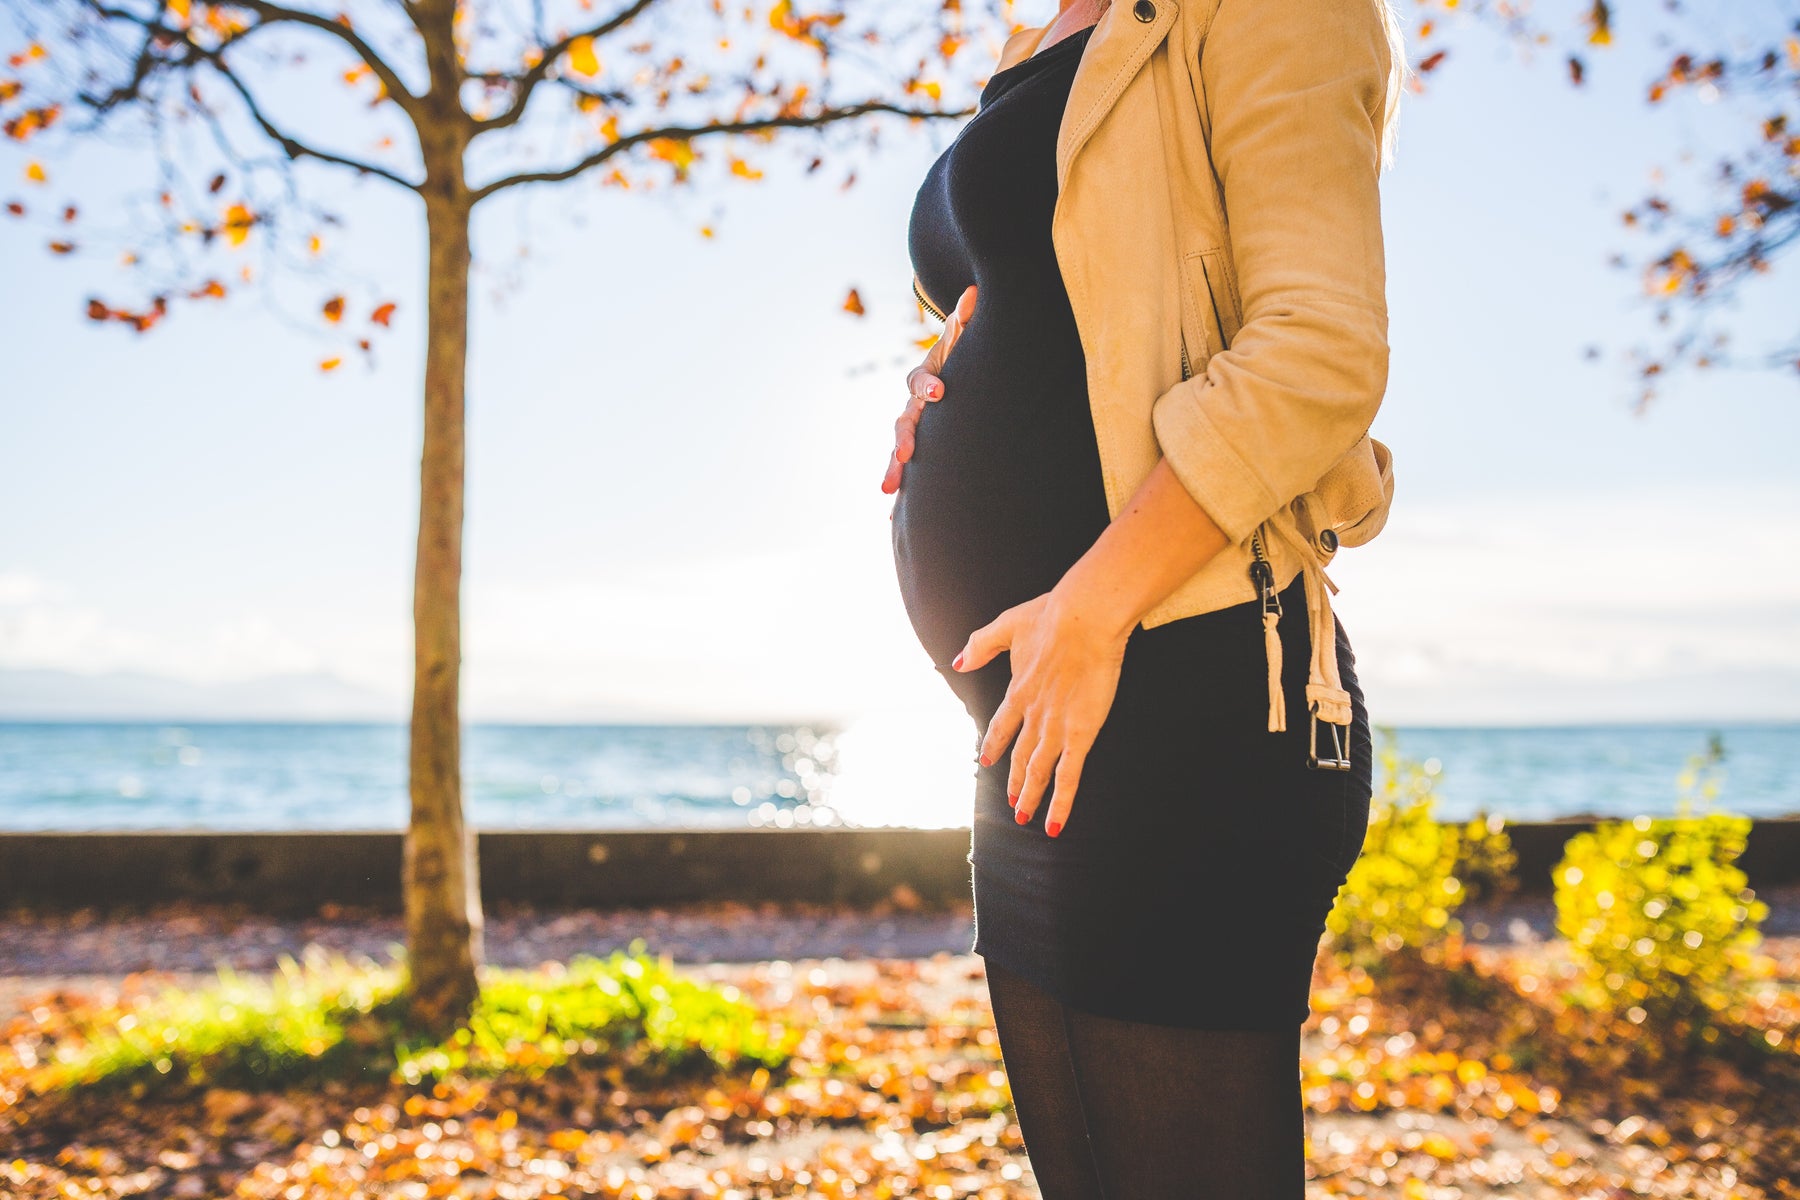 Prenatal Vitamins - Important for Healthy Pregnancies